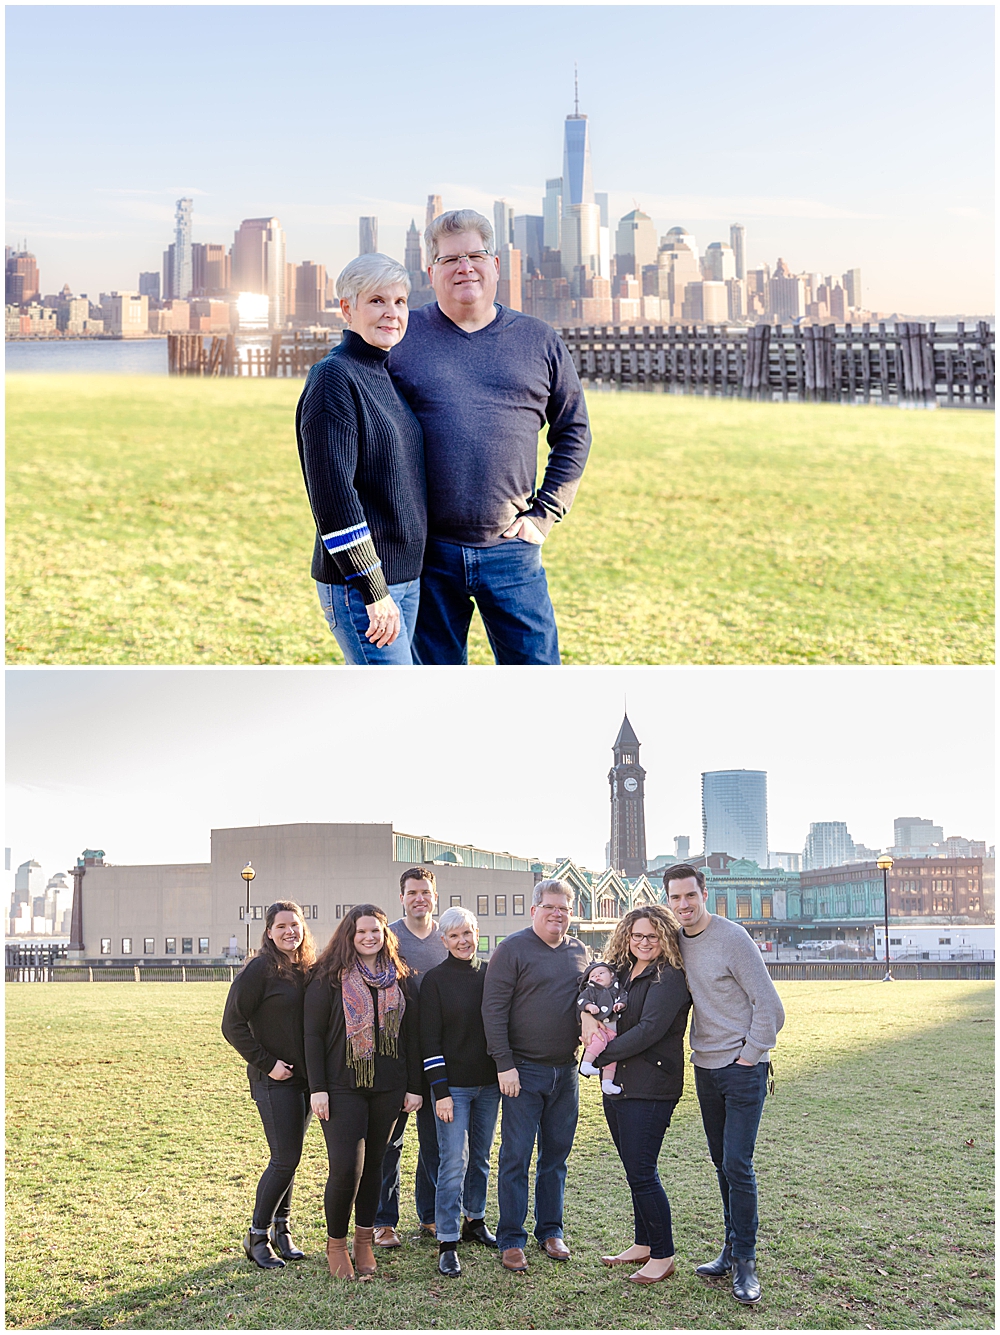 Hoboken Pier A Extended Family Photo